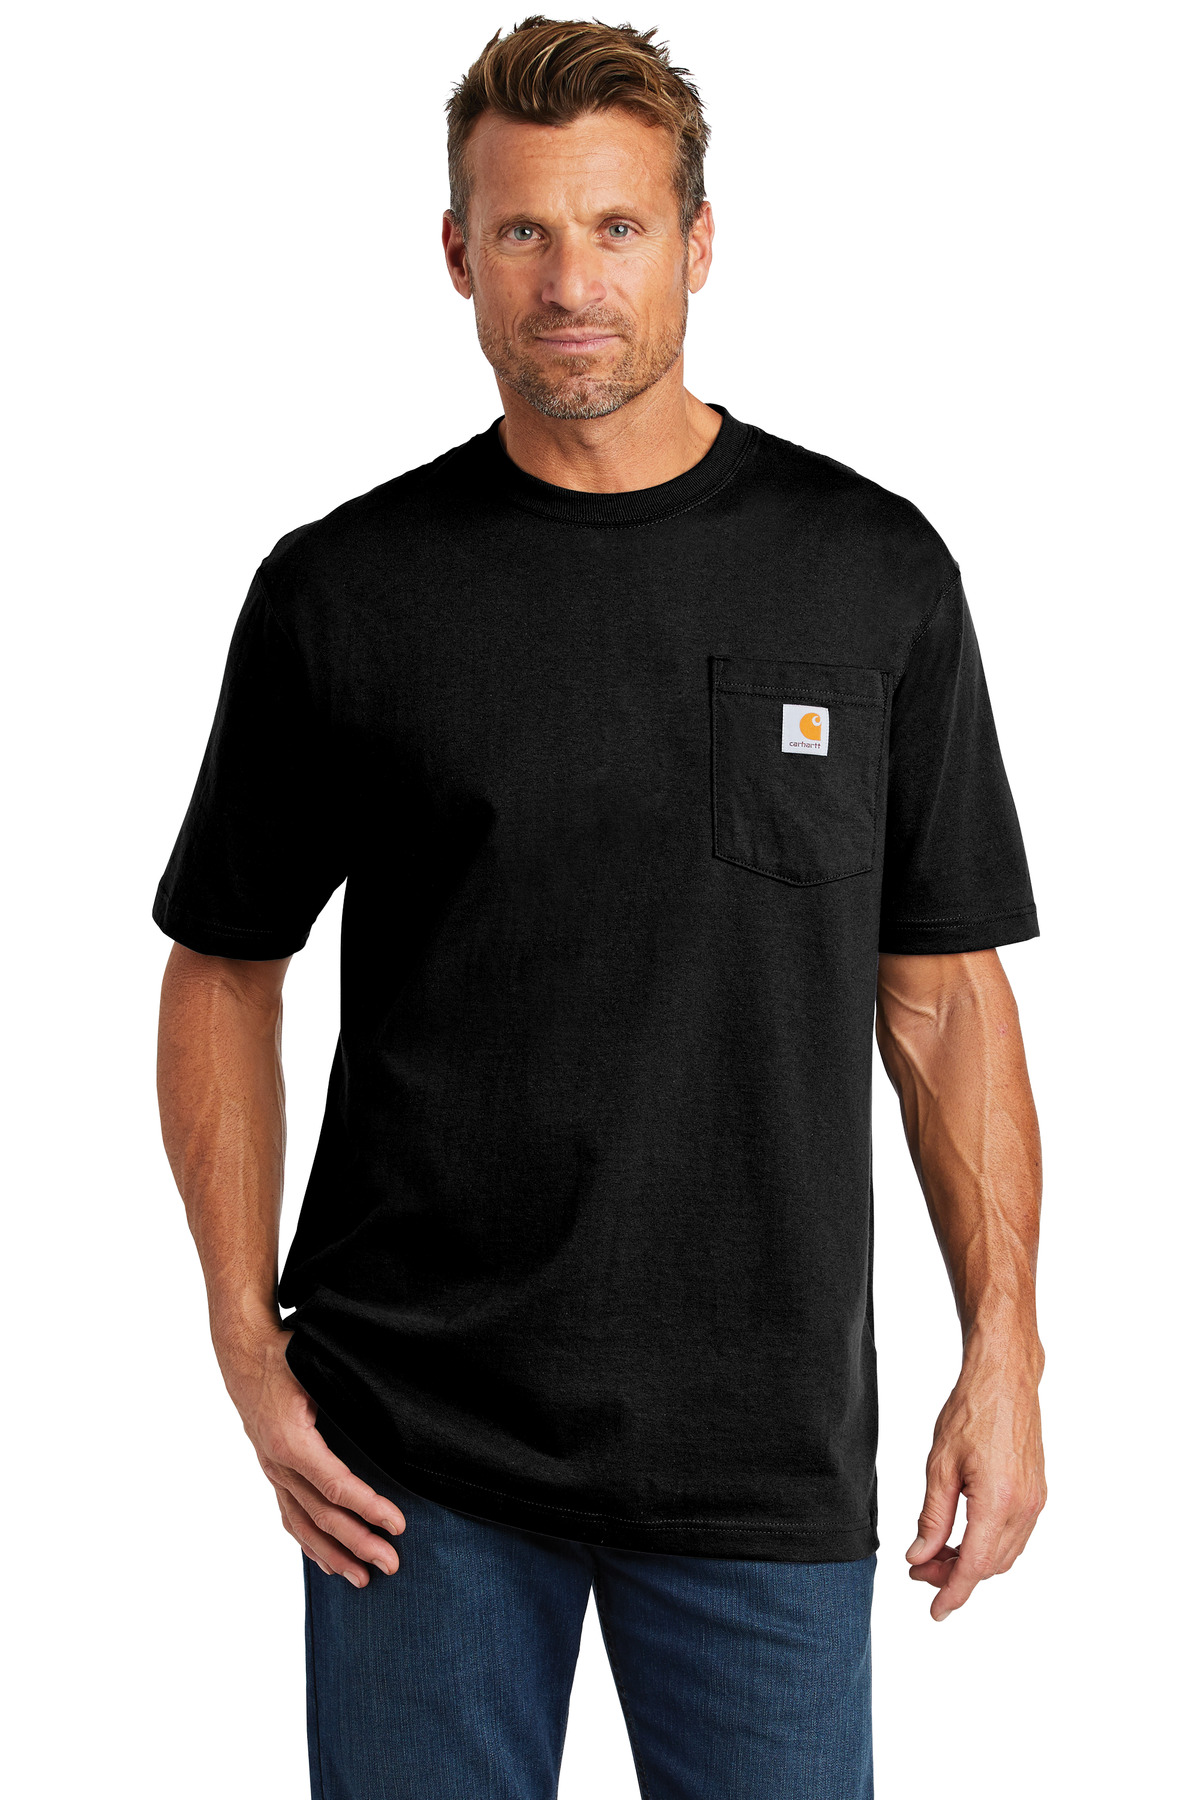 Buy Carhartt Workwear Pocket Short Sleeve T-Shirt - Carhartt Online at ...